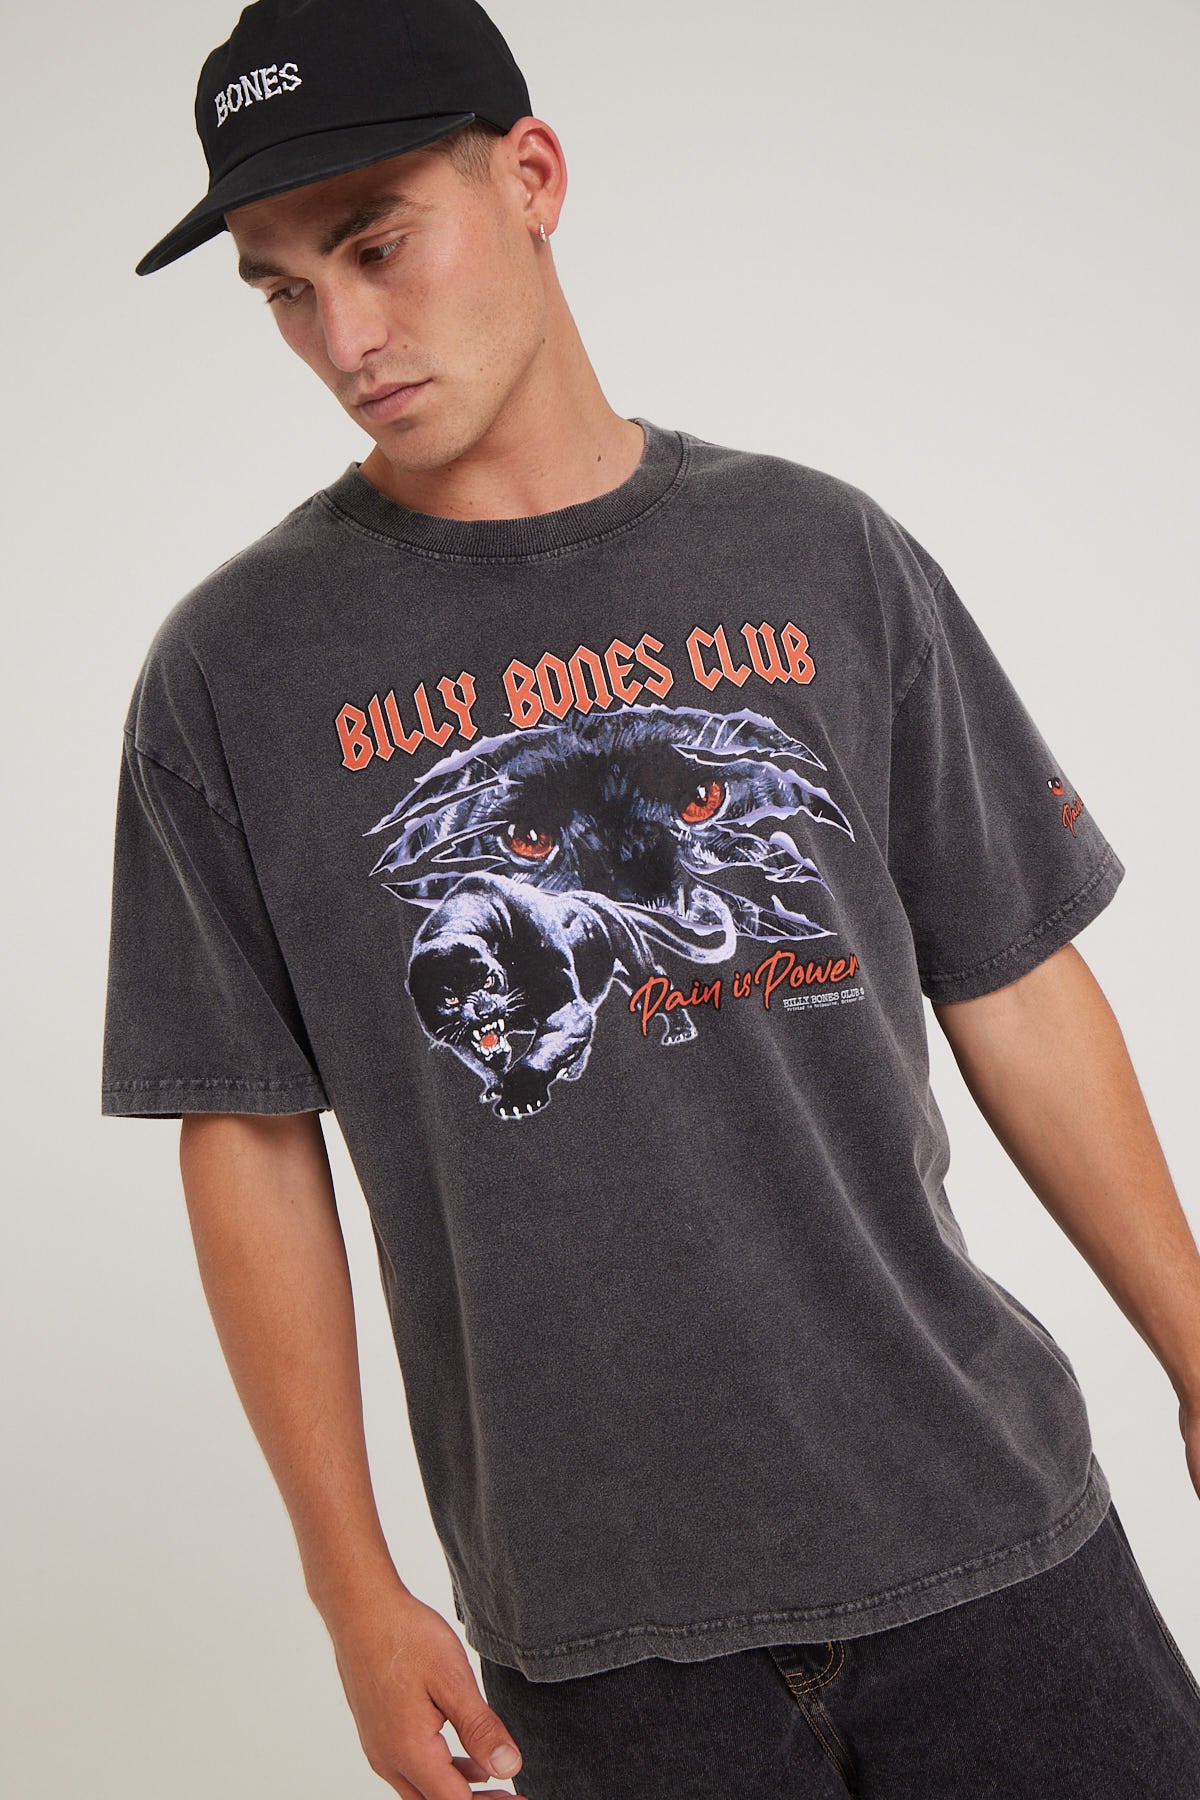 Billy Bones Club Sx Panther Tee Washed Black Washed Black